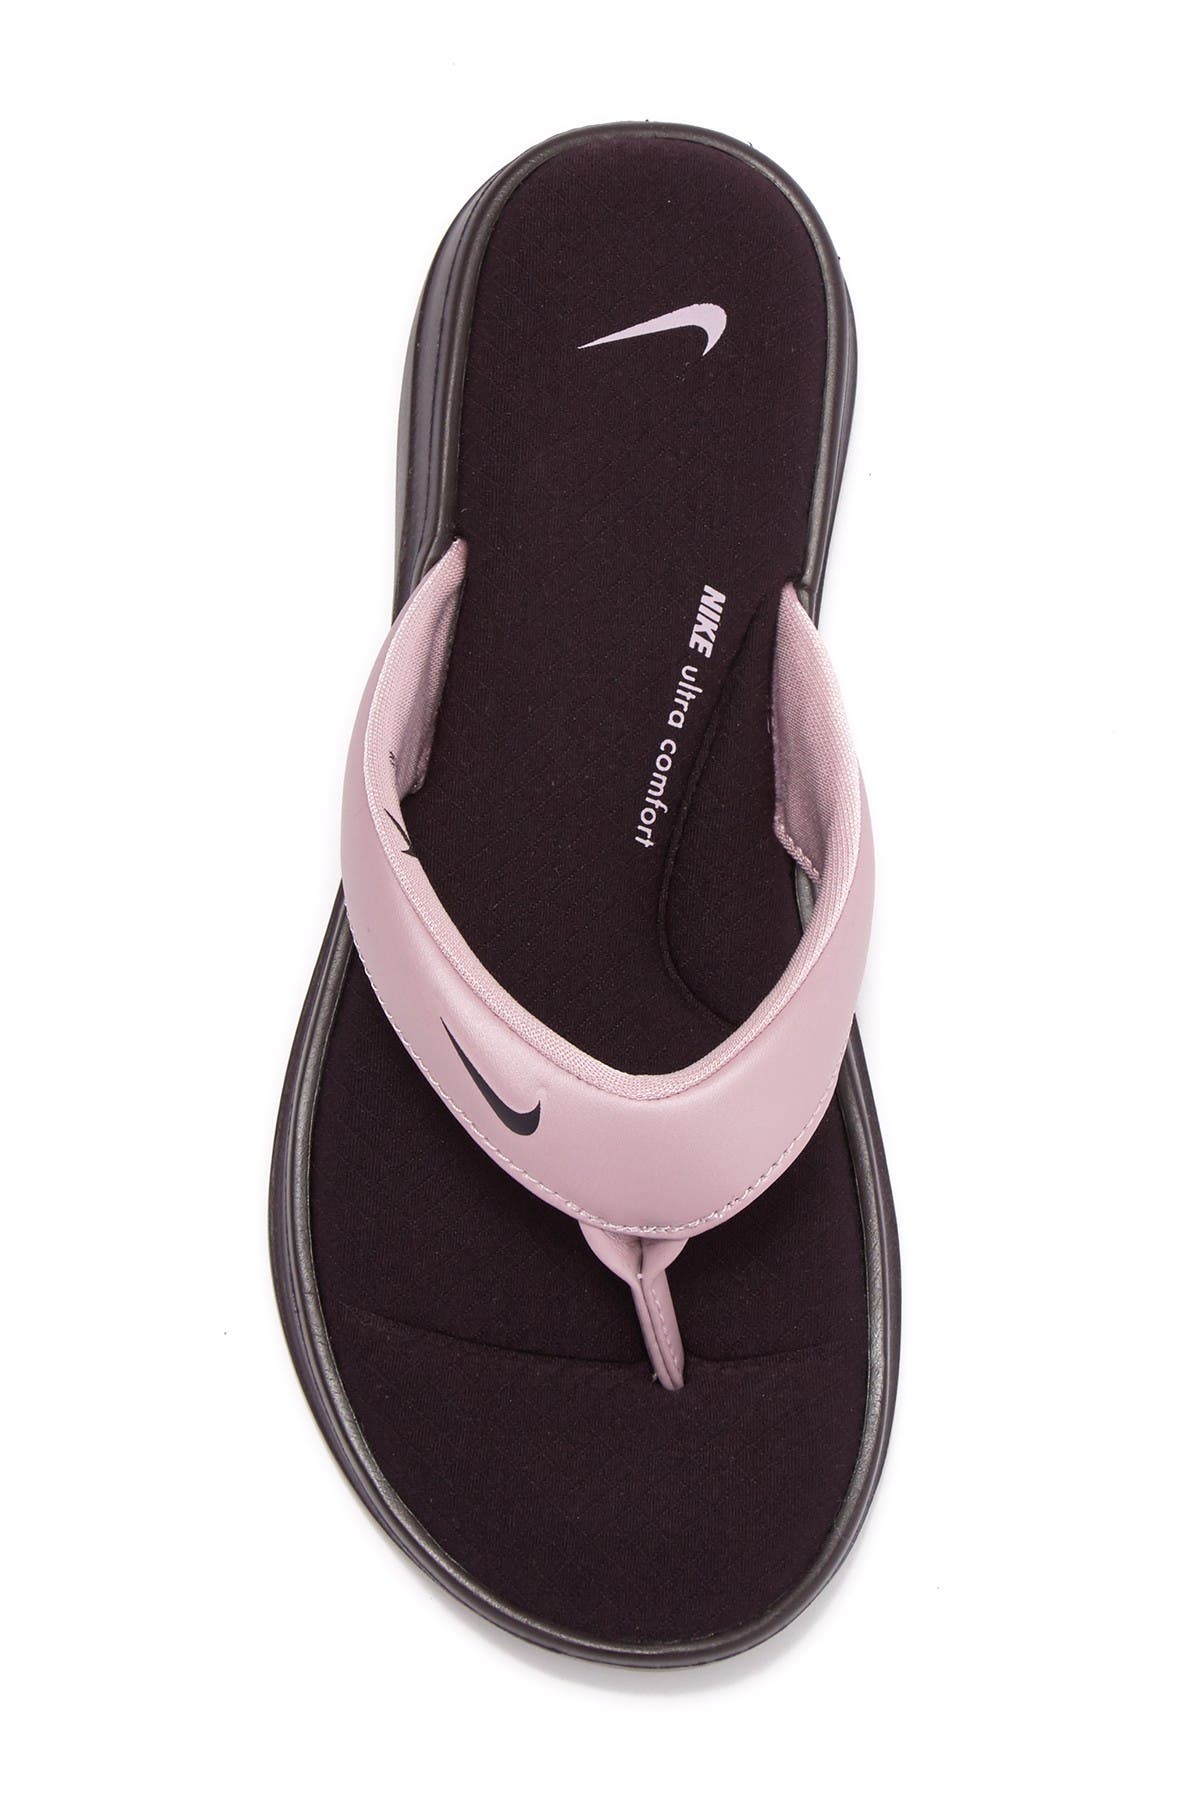 nike women's ultra comfort flip flops